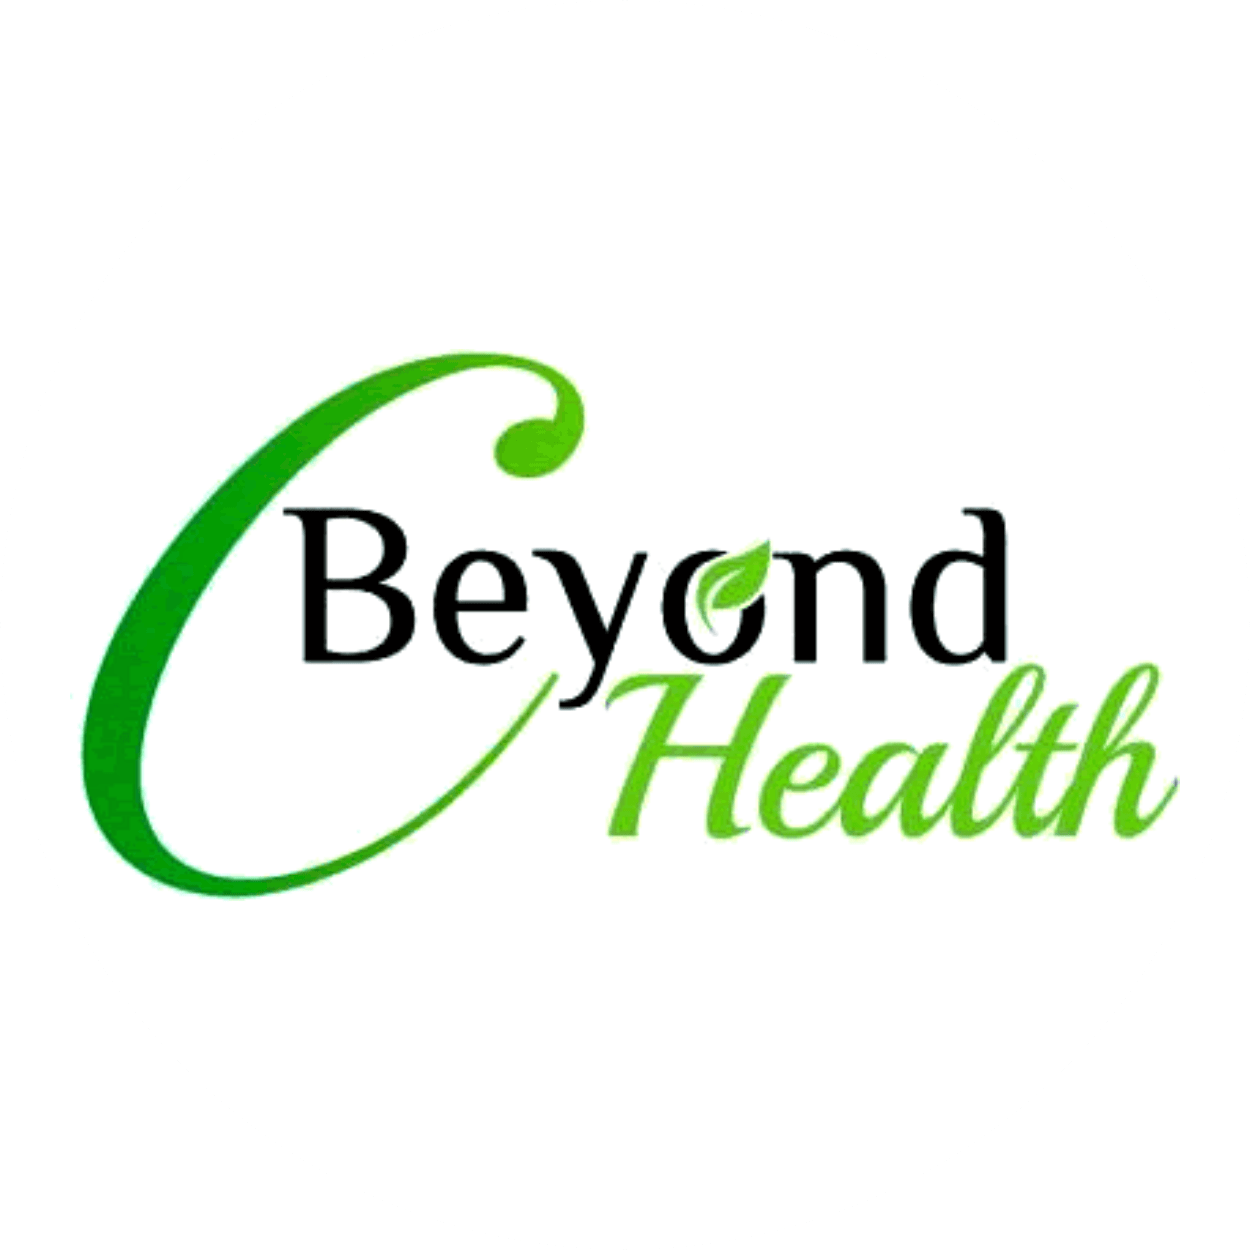 C Beyond Health Odyssey magazine stockist health shop hermanus